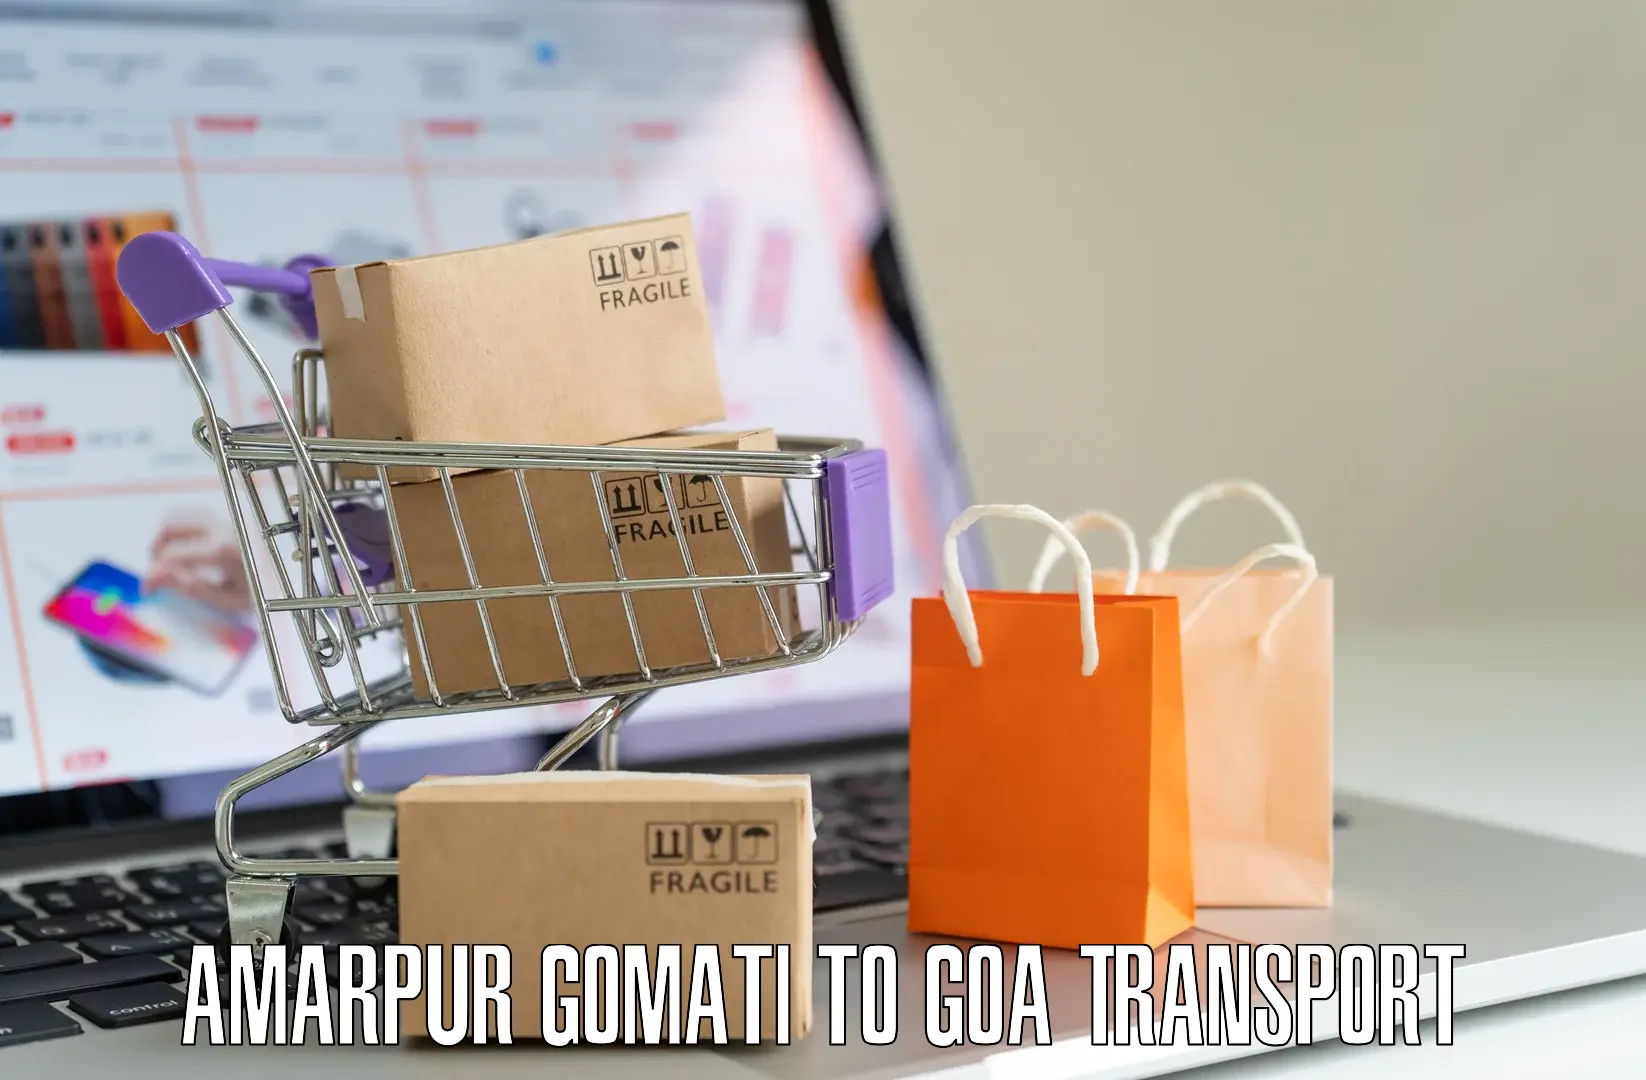 Transport shared services Amarpur Gomati to Bardez